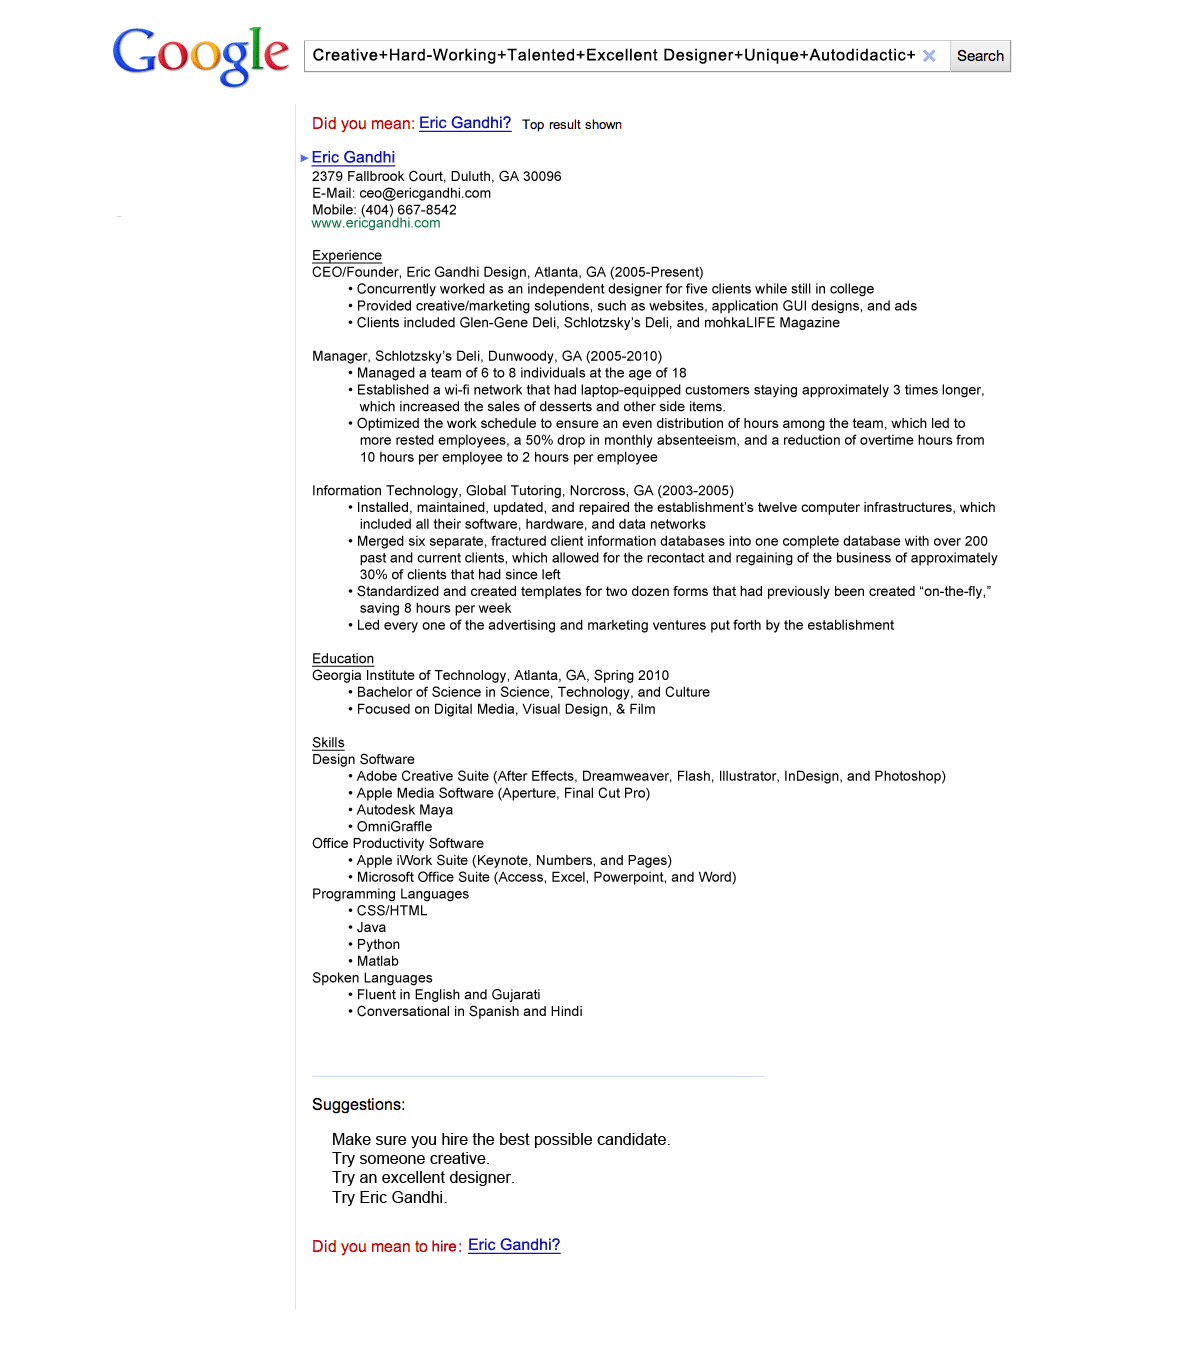 google-resume3